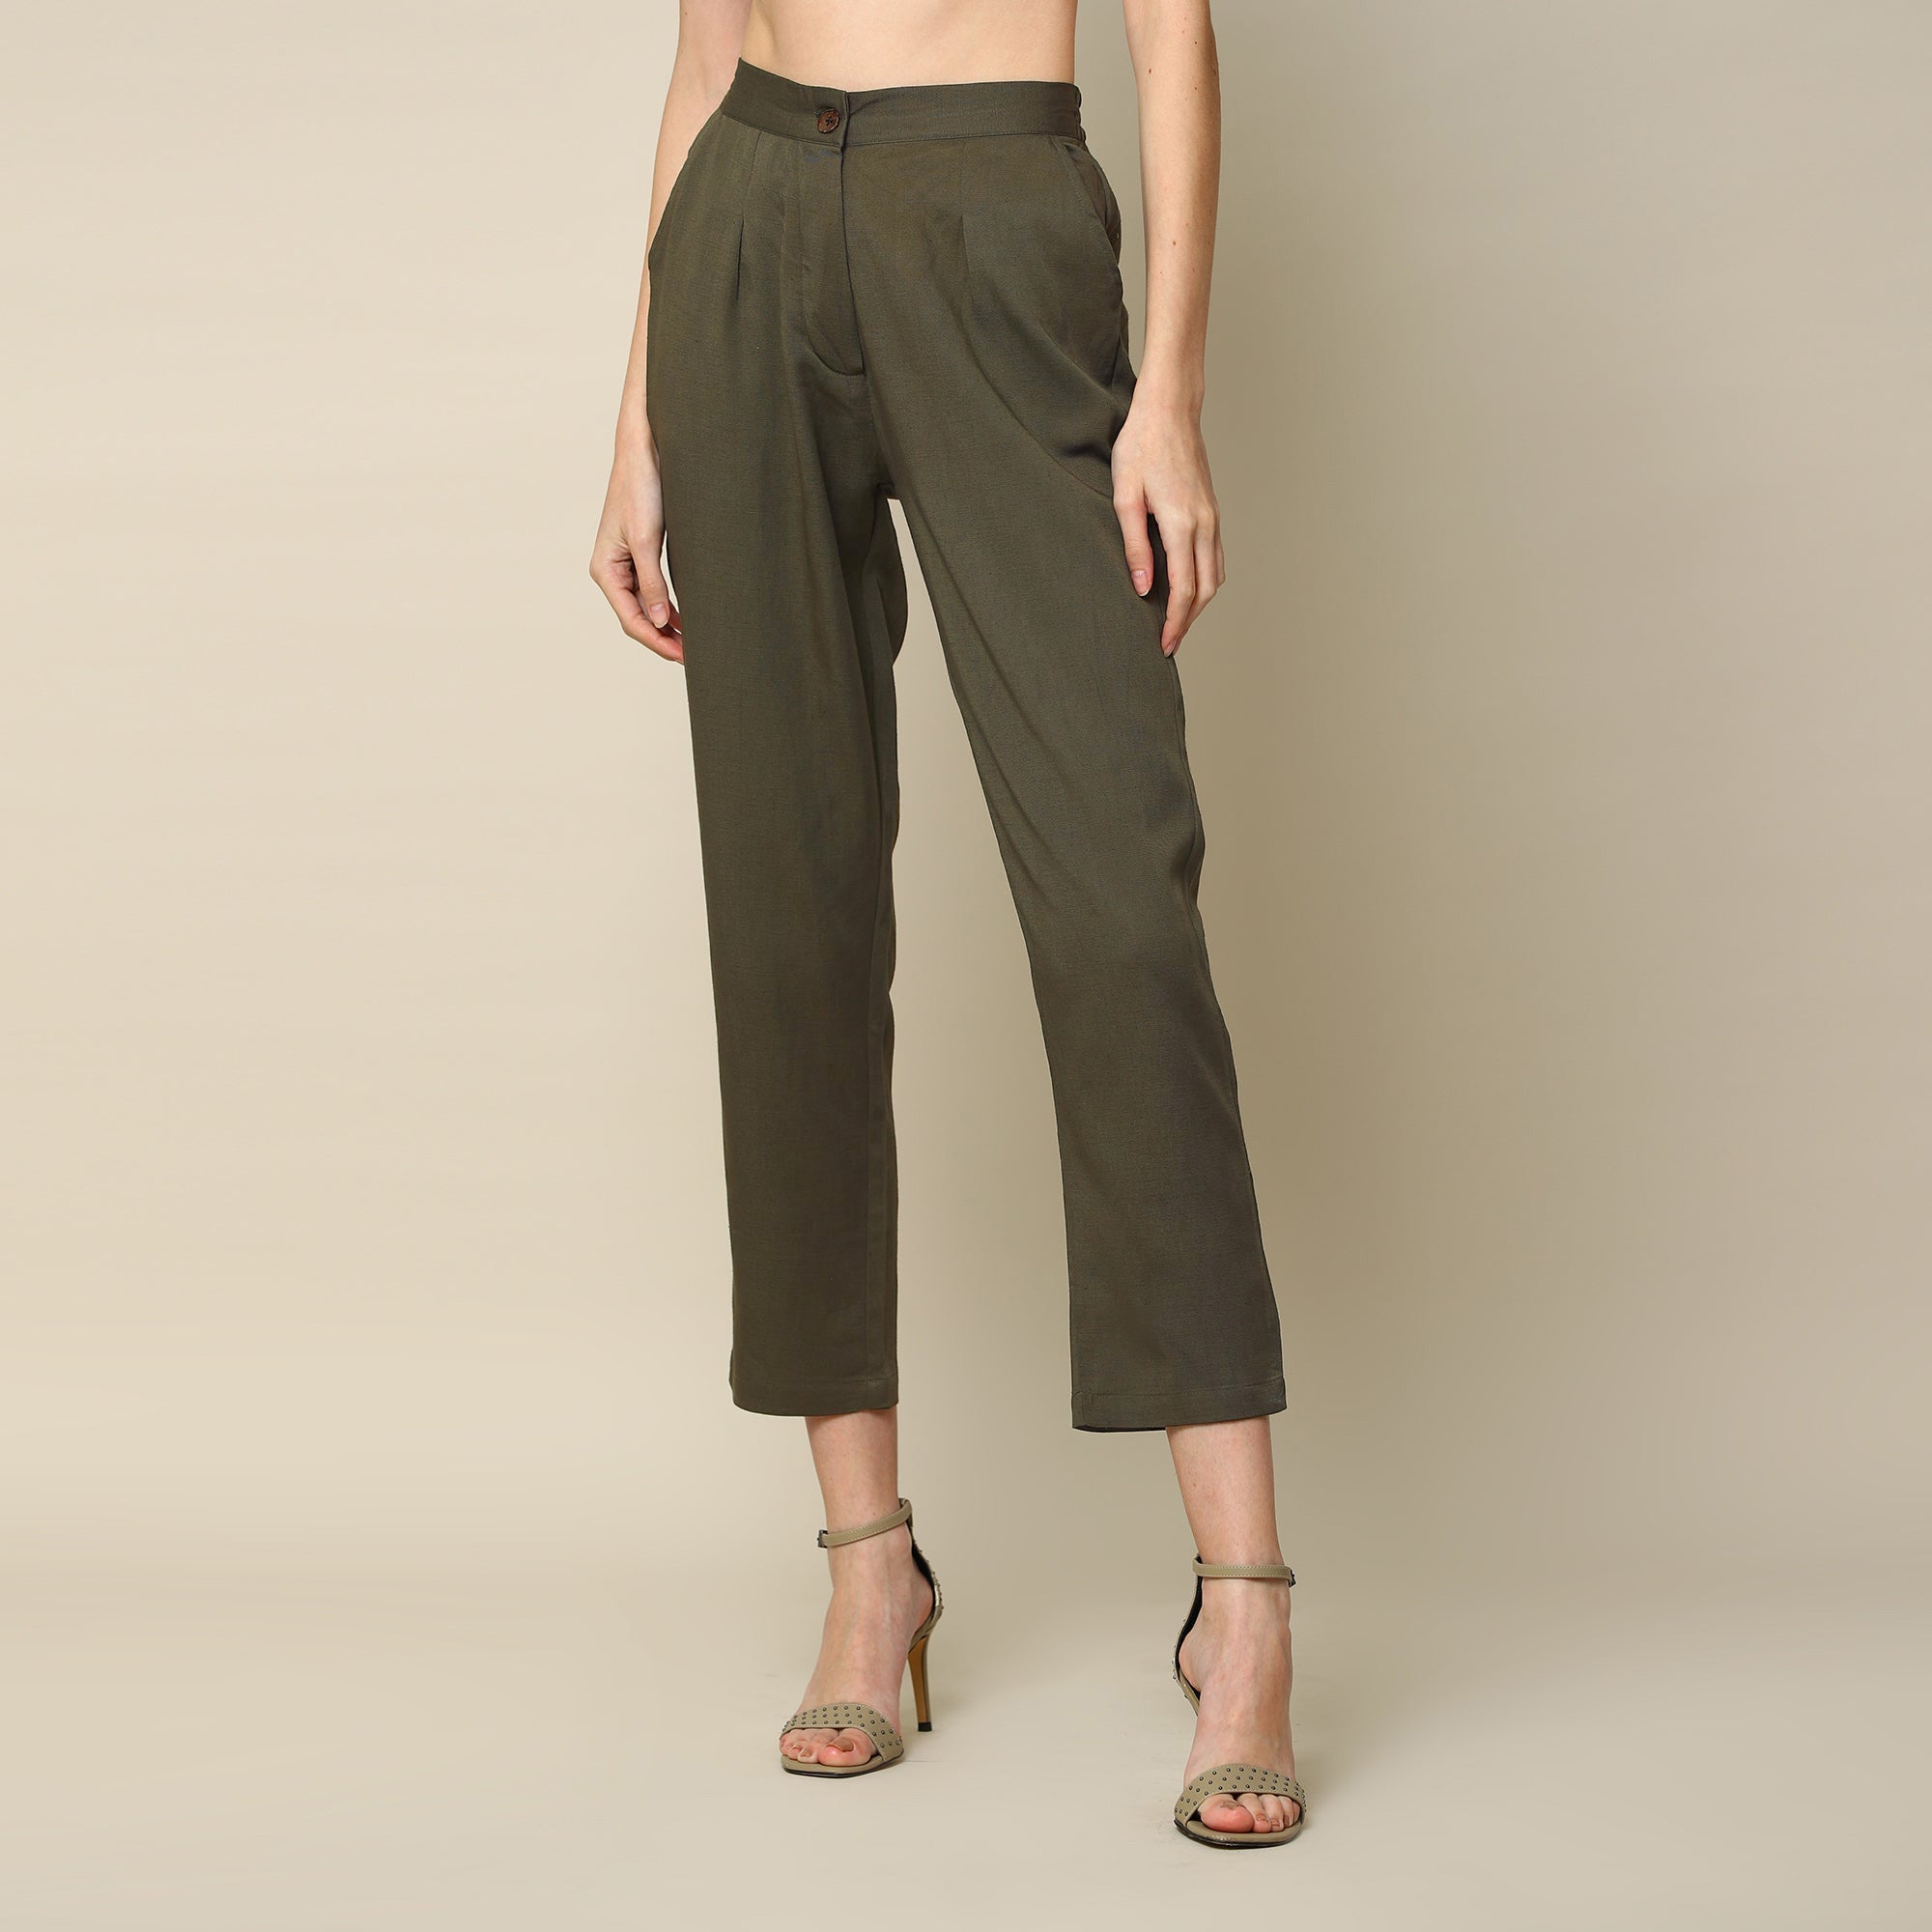 Florence Set of 3 - Long Shirt Overlay, Slip Top & Pants - Olive & Navy